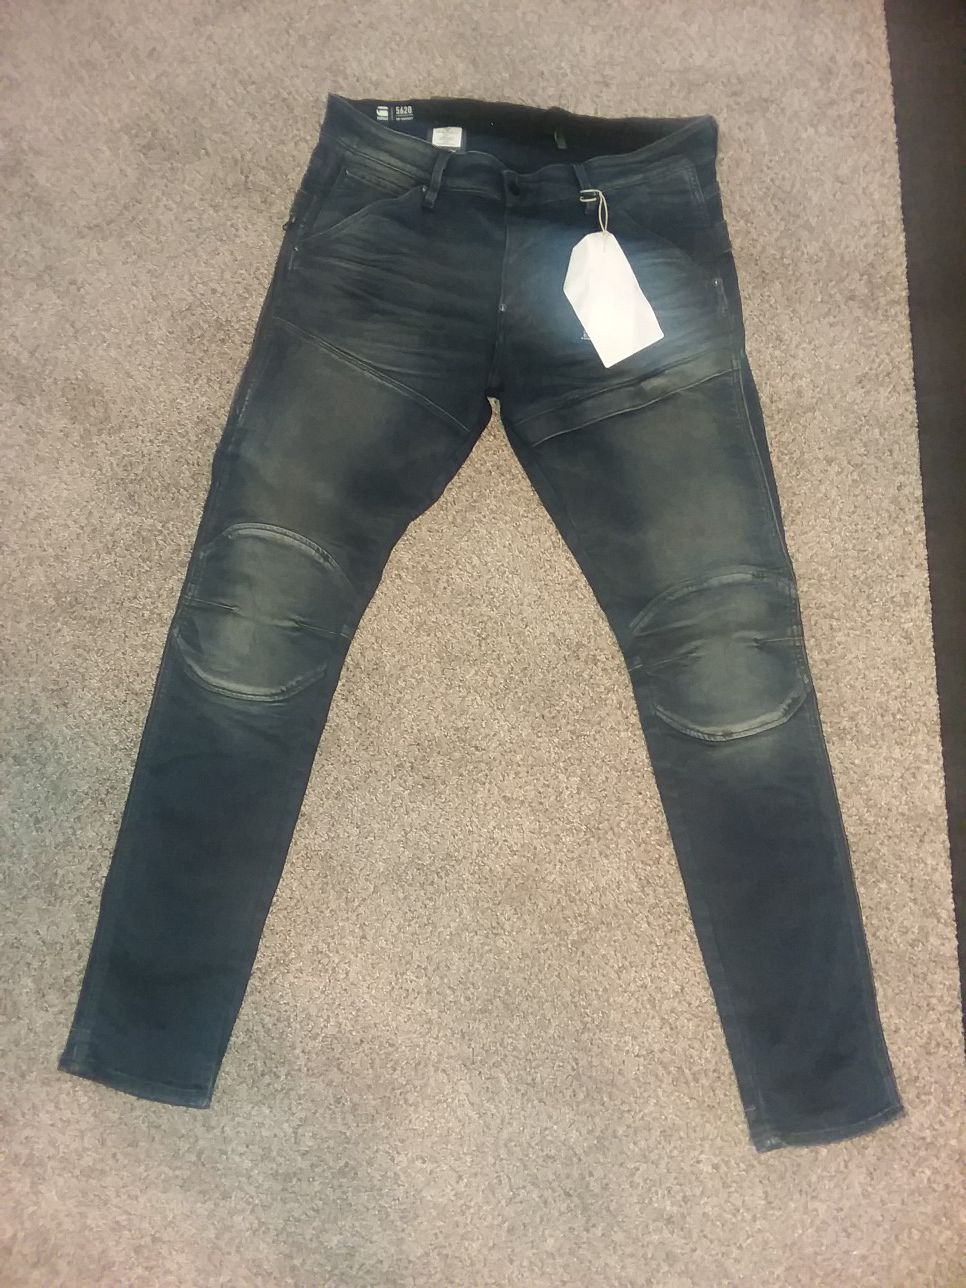 G Star Raw 5620 Skinny Jeans sz 36-34 for Sale in Woodbridge, VA - OfferUp